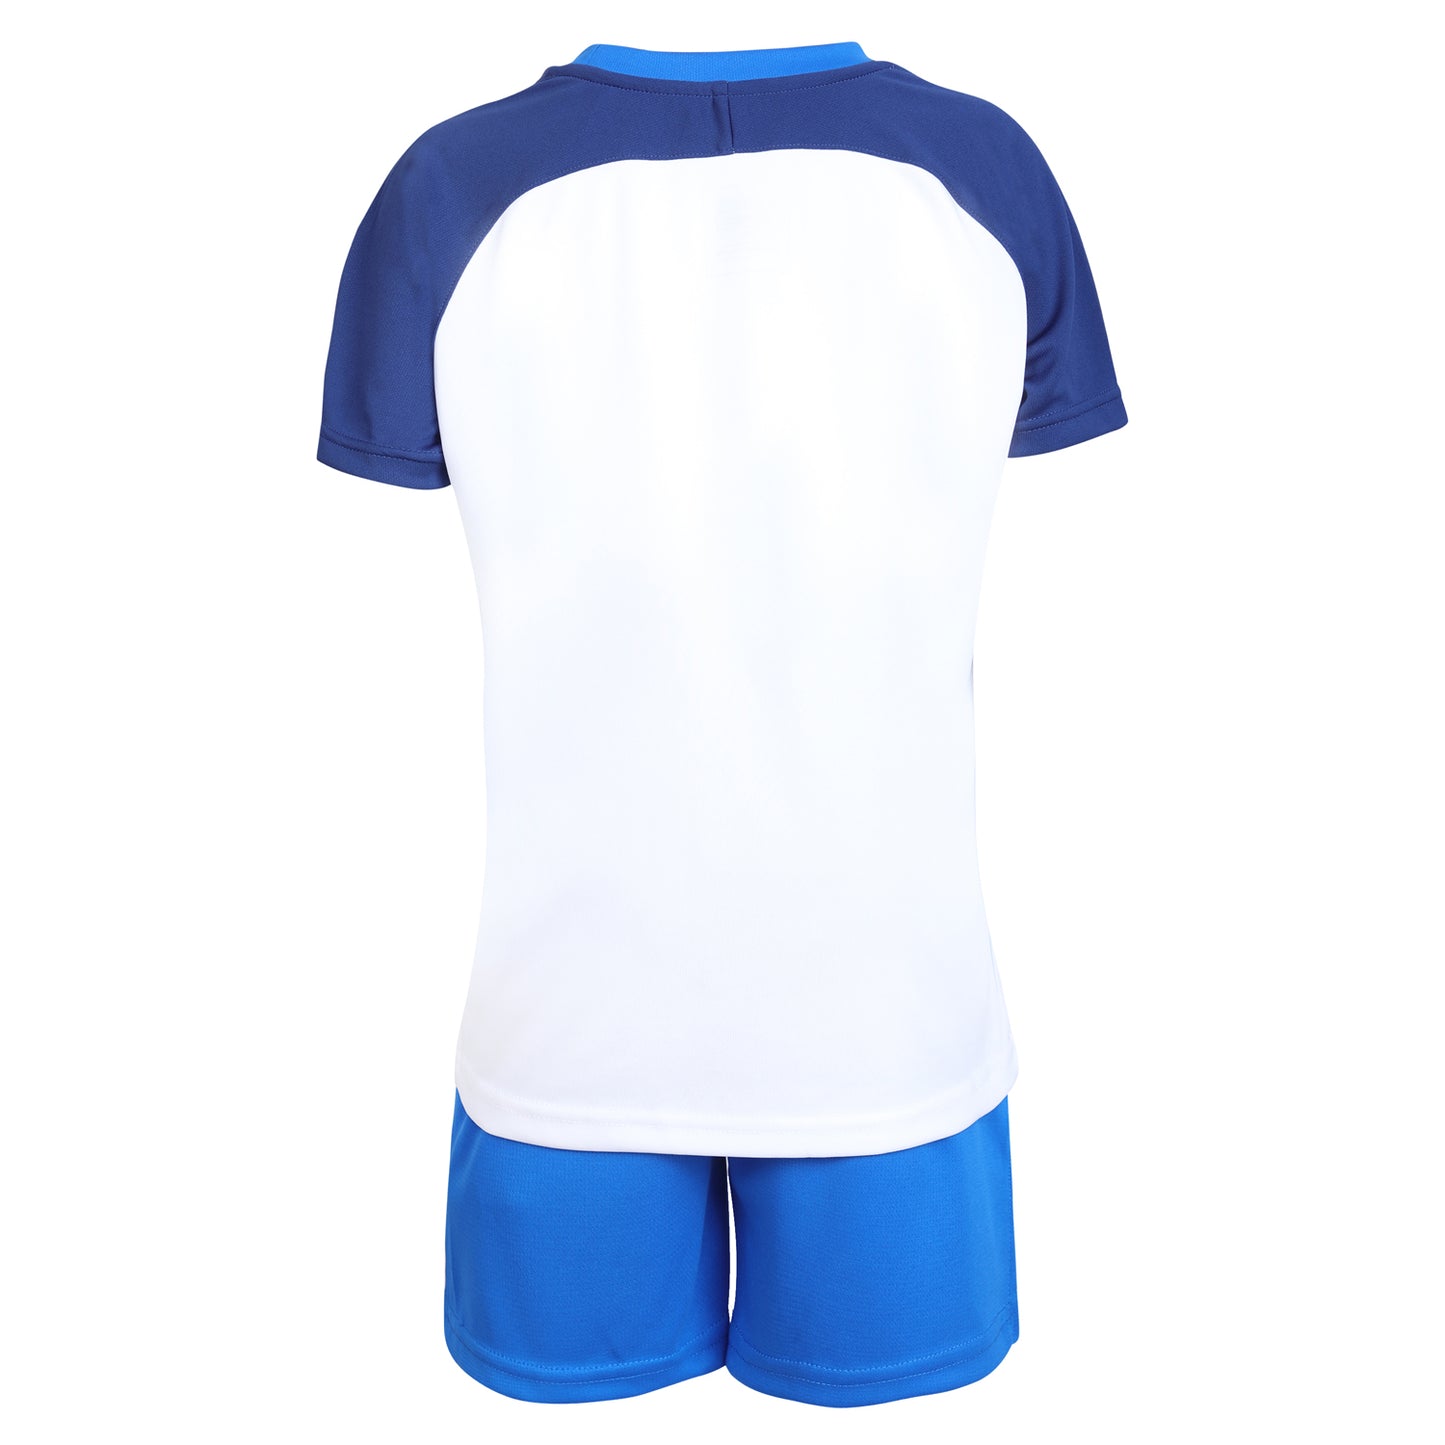 Yonex 1597 Round Neck T-Shirt and Short set for Junior, Bright White - Best Price online Prokicksports.com